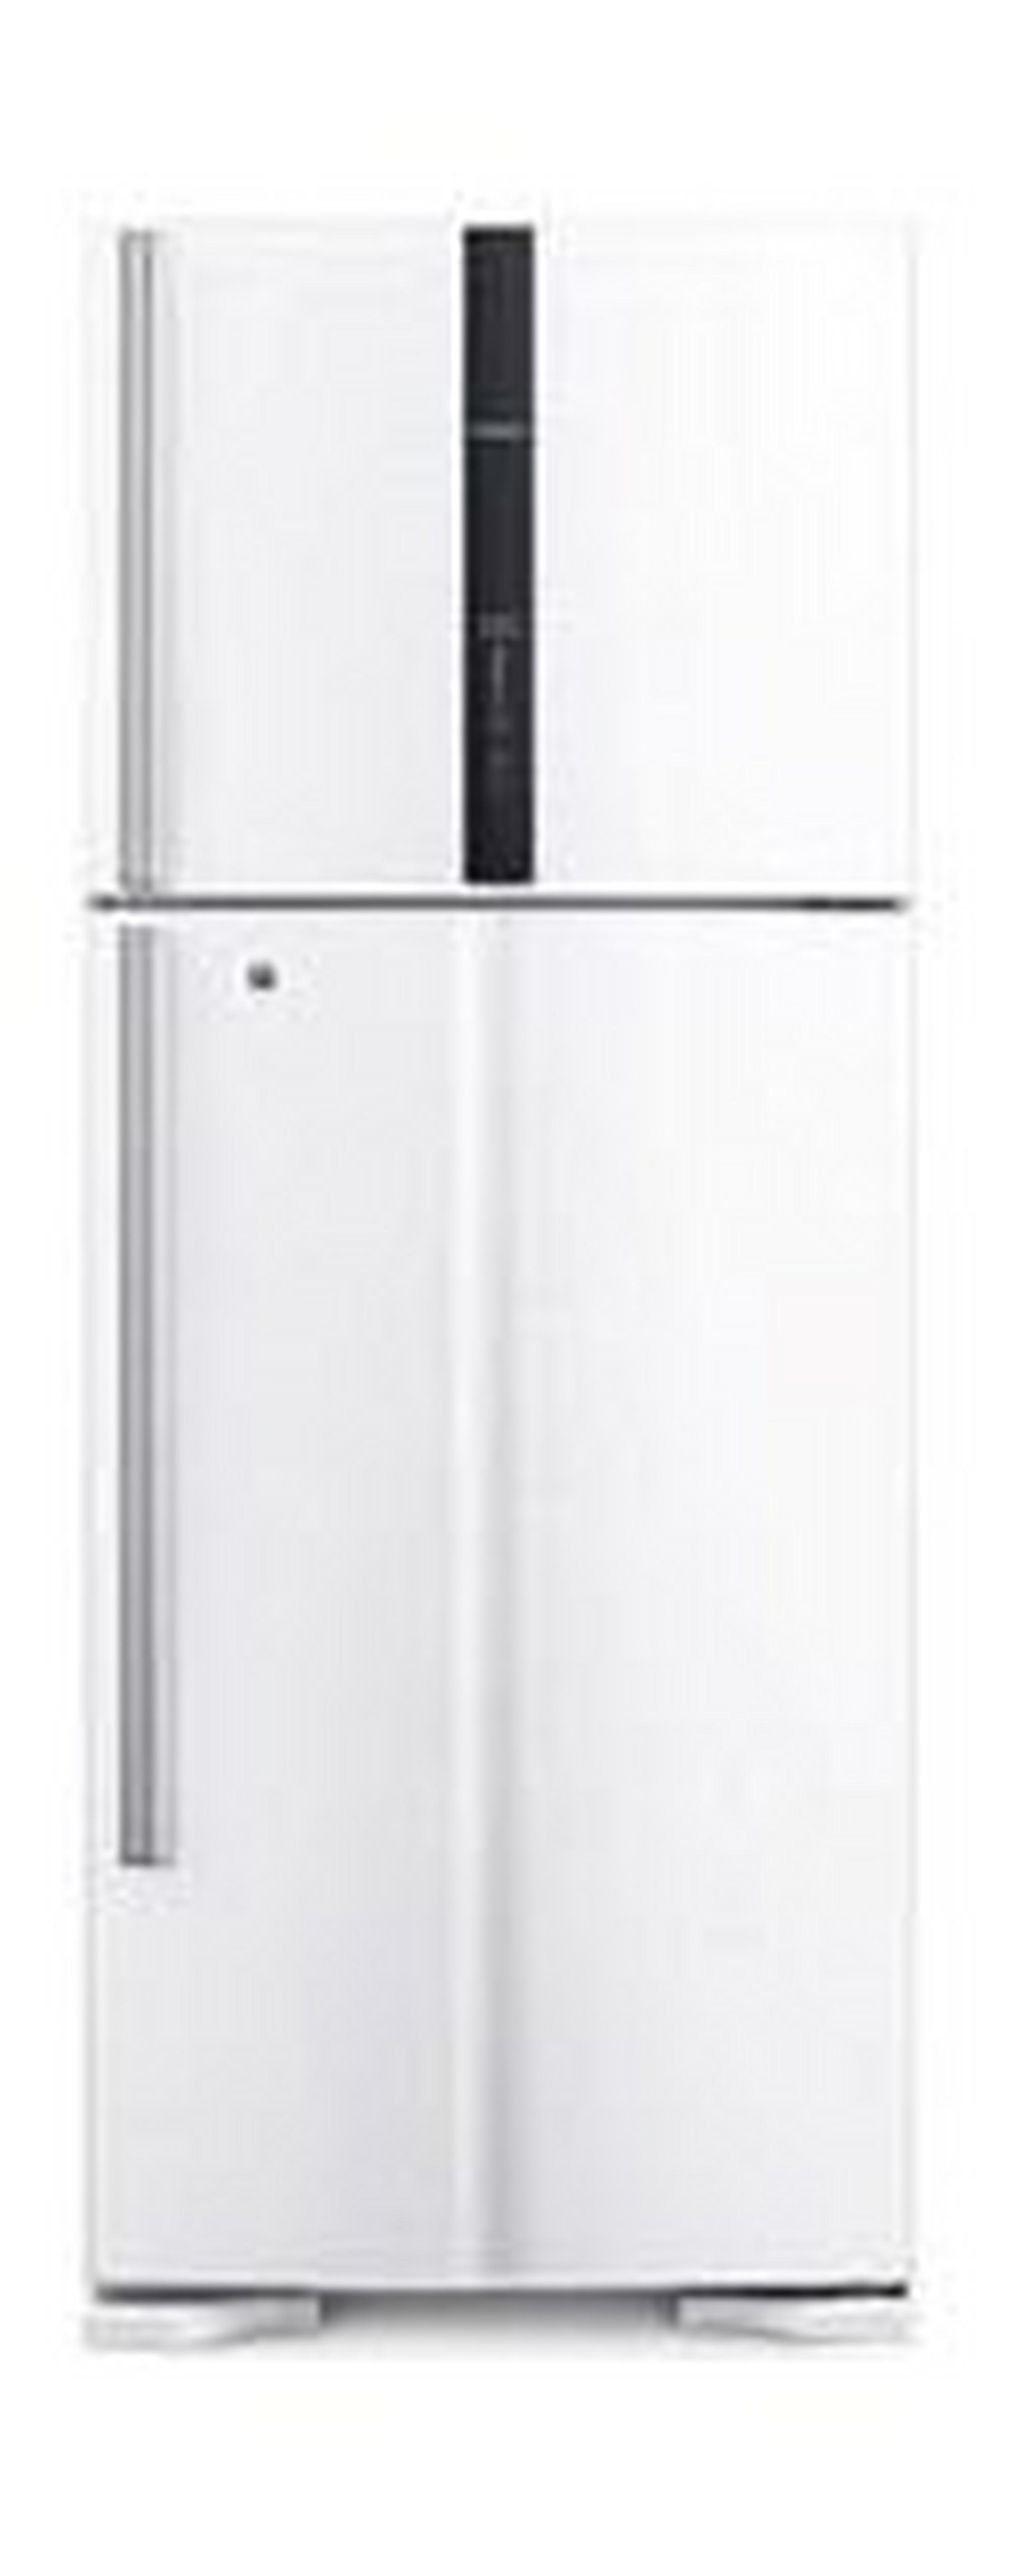 Hitachi 16 Cubic Feet Top Mount Refrigerator - White (R-V600PS3K TWH)